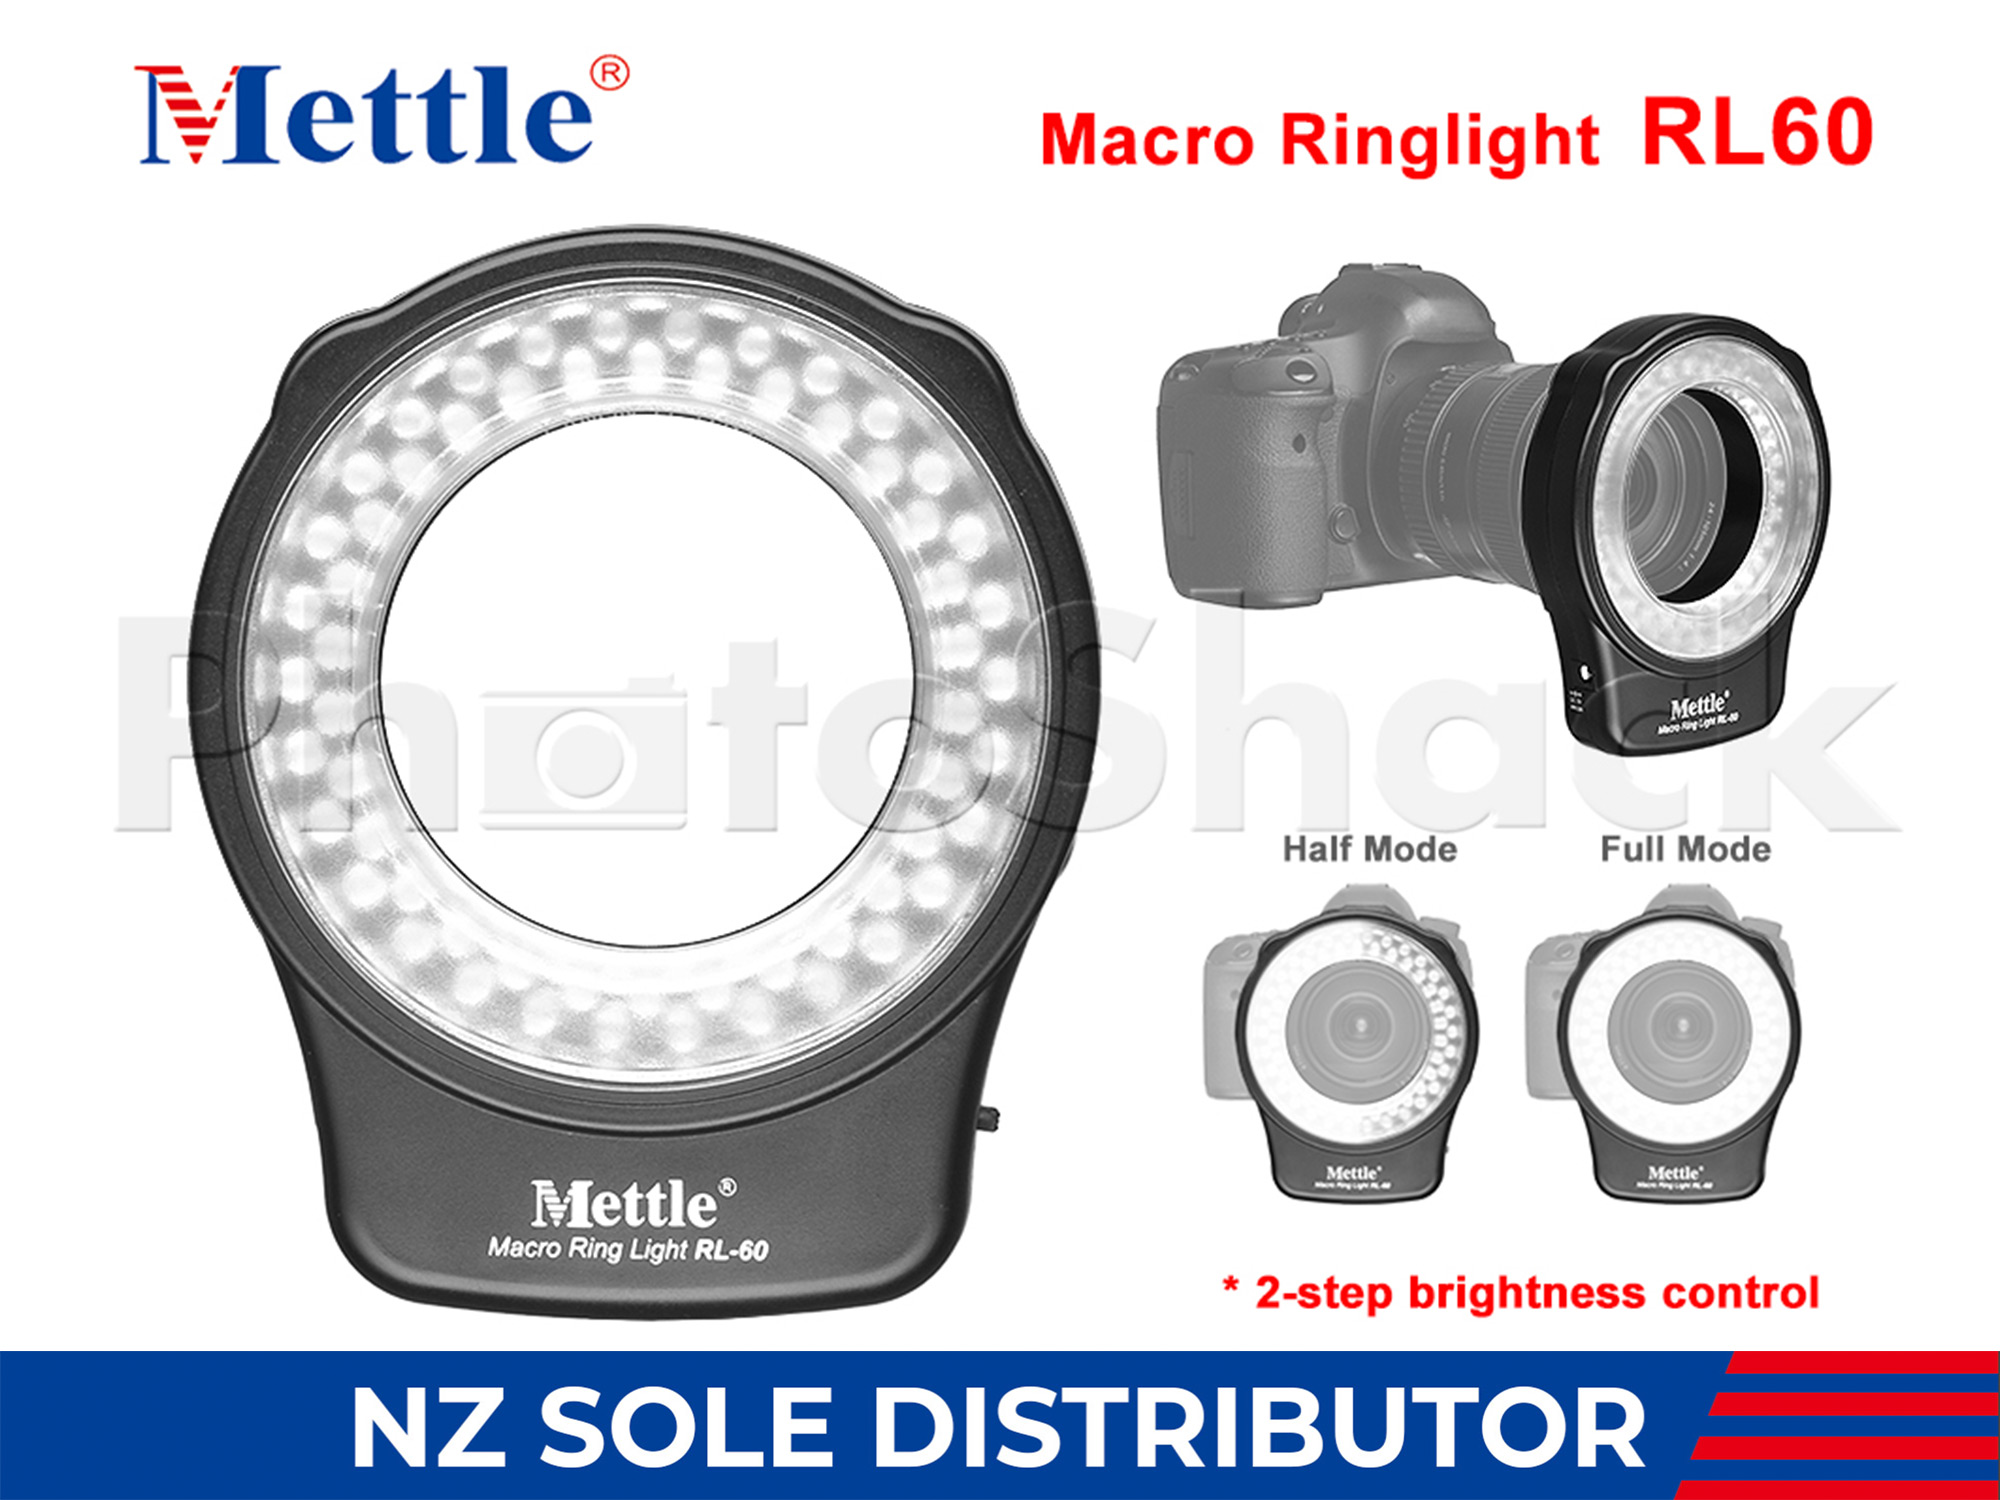 LED Macro Ringlight - Mettle RL60